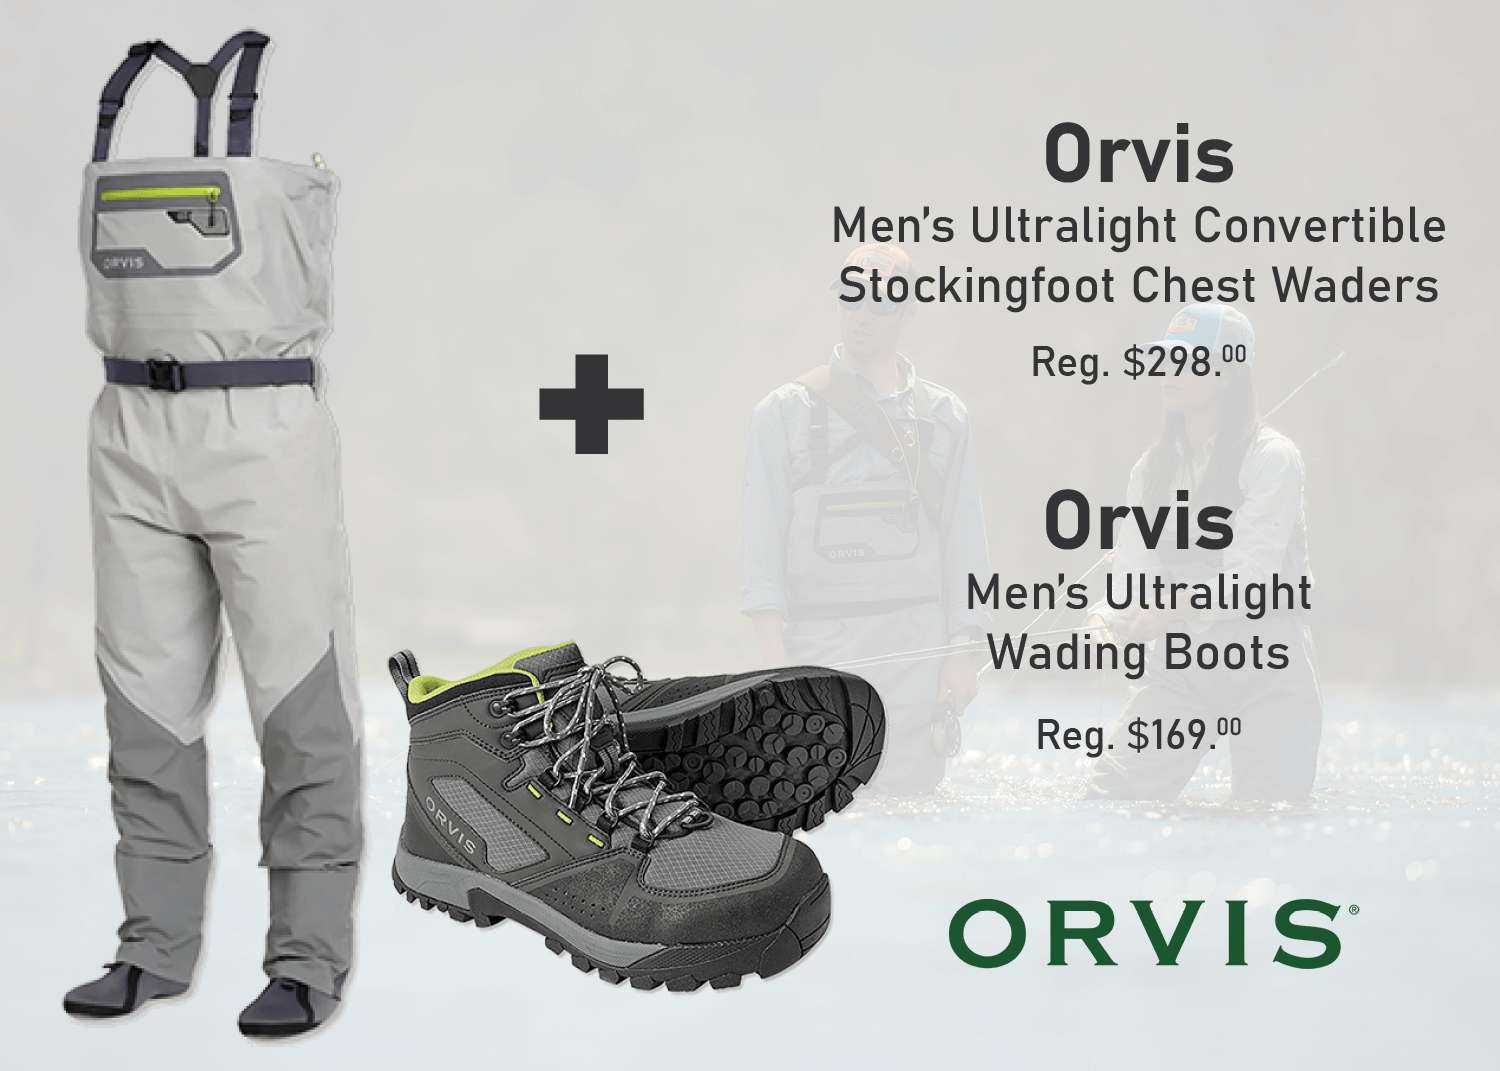 Orvis Men's Ultralight Convertible Stockingfoot Chest Waders + Orvis Men's Ultralight Wading Boots